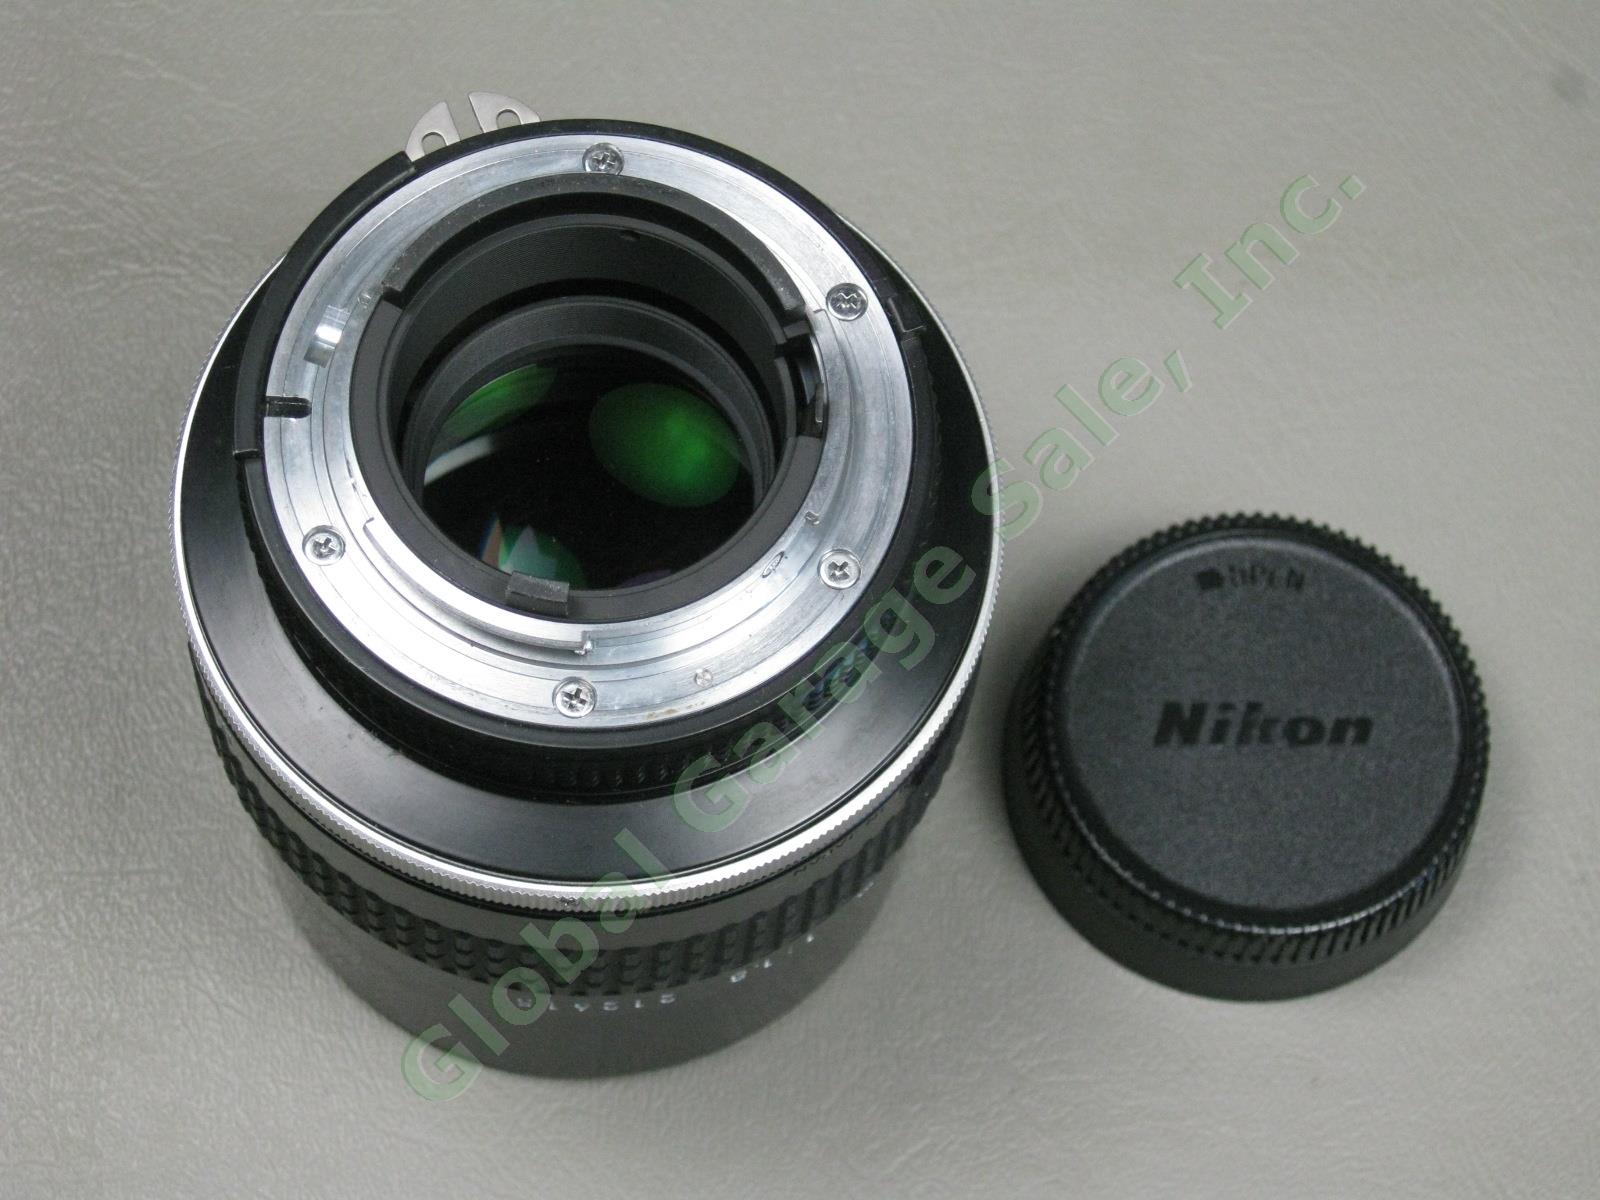 Nikon Nikkor 105mm 1:1.8 f/1.8 Telephoto Camera Lens #212615 Nice! No Reserve! 4